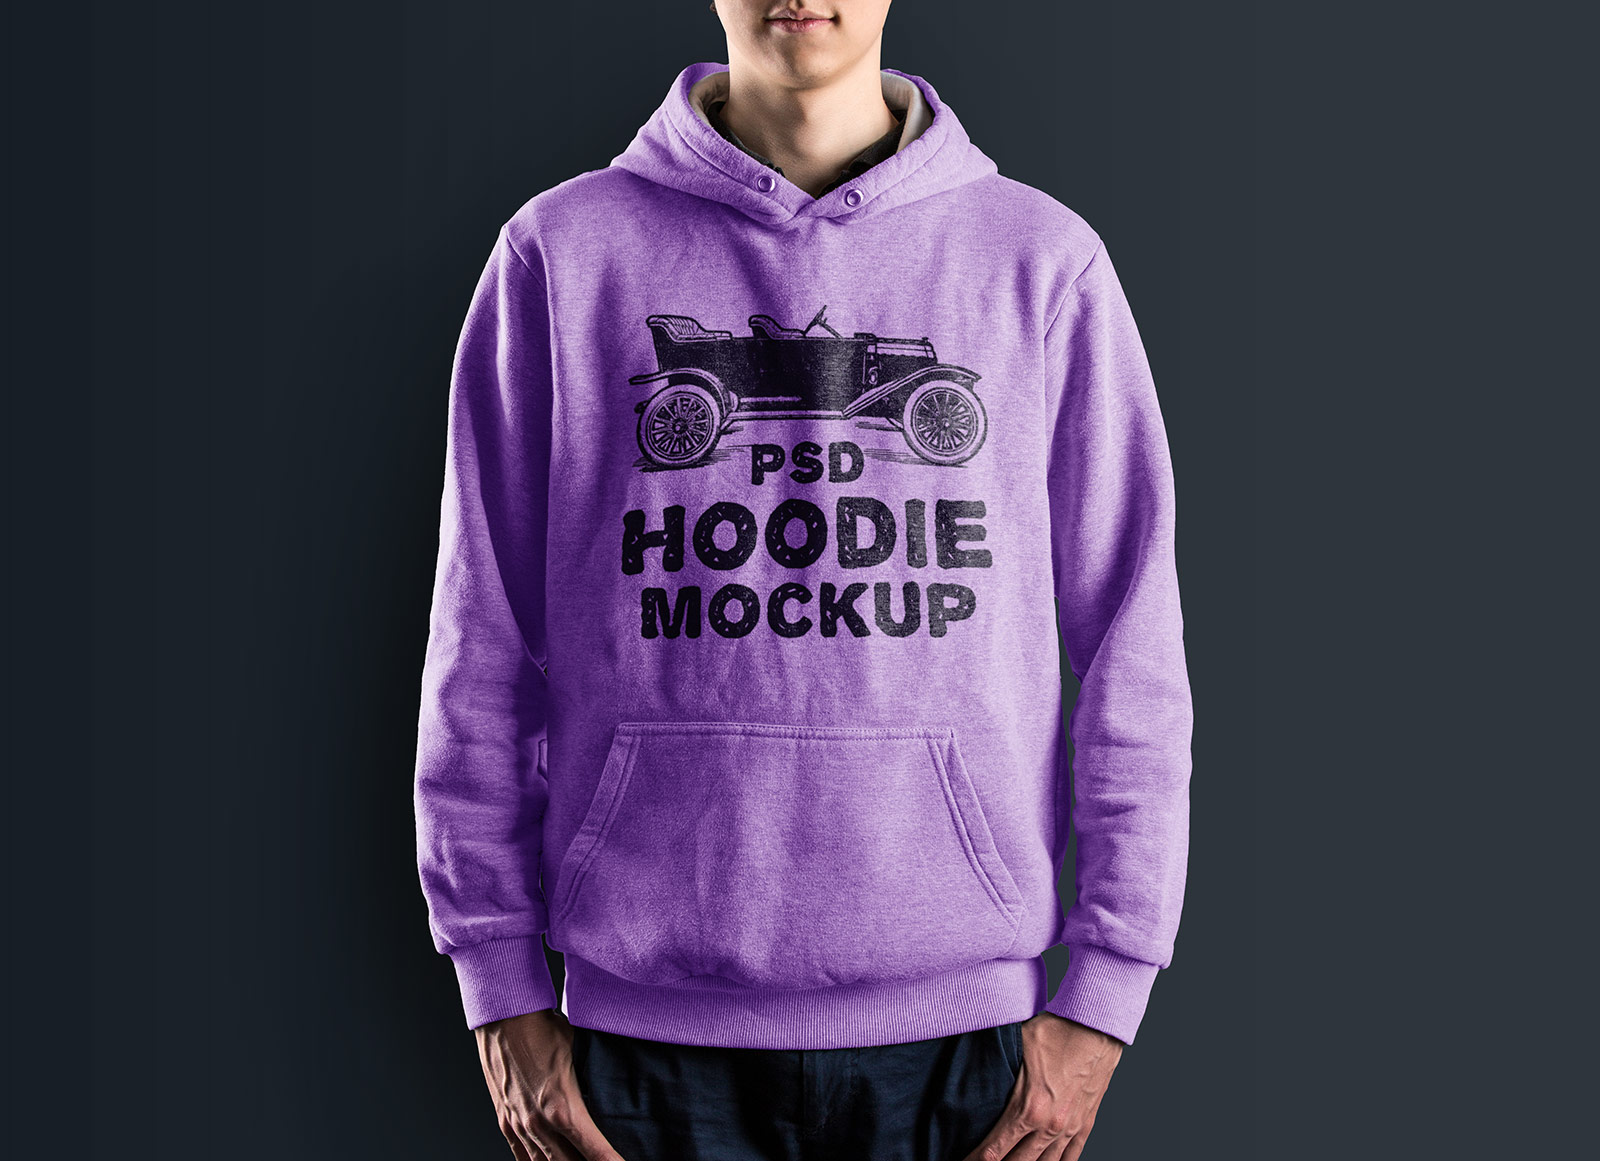 Free-Hoodie-T-Shirt-Mockup-PSD-File